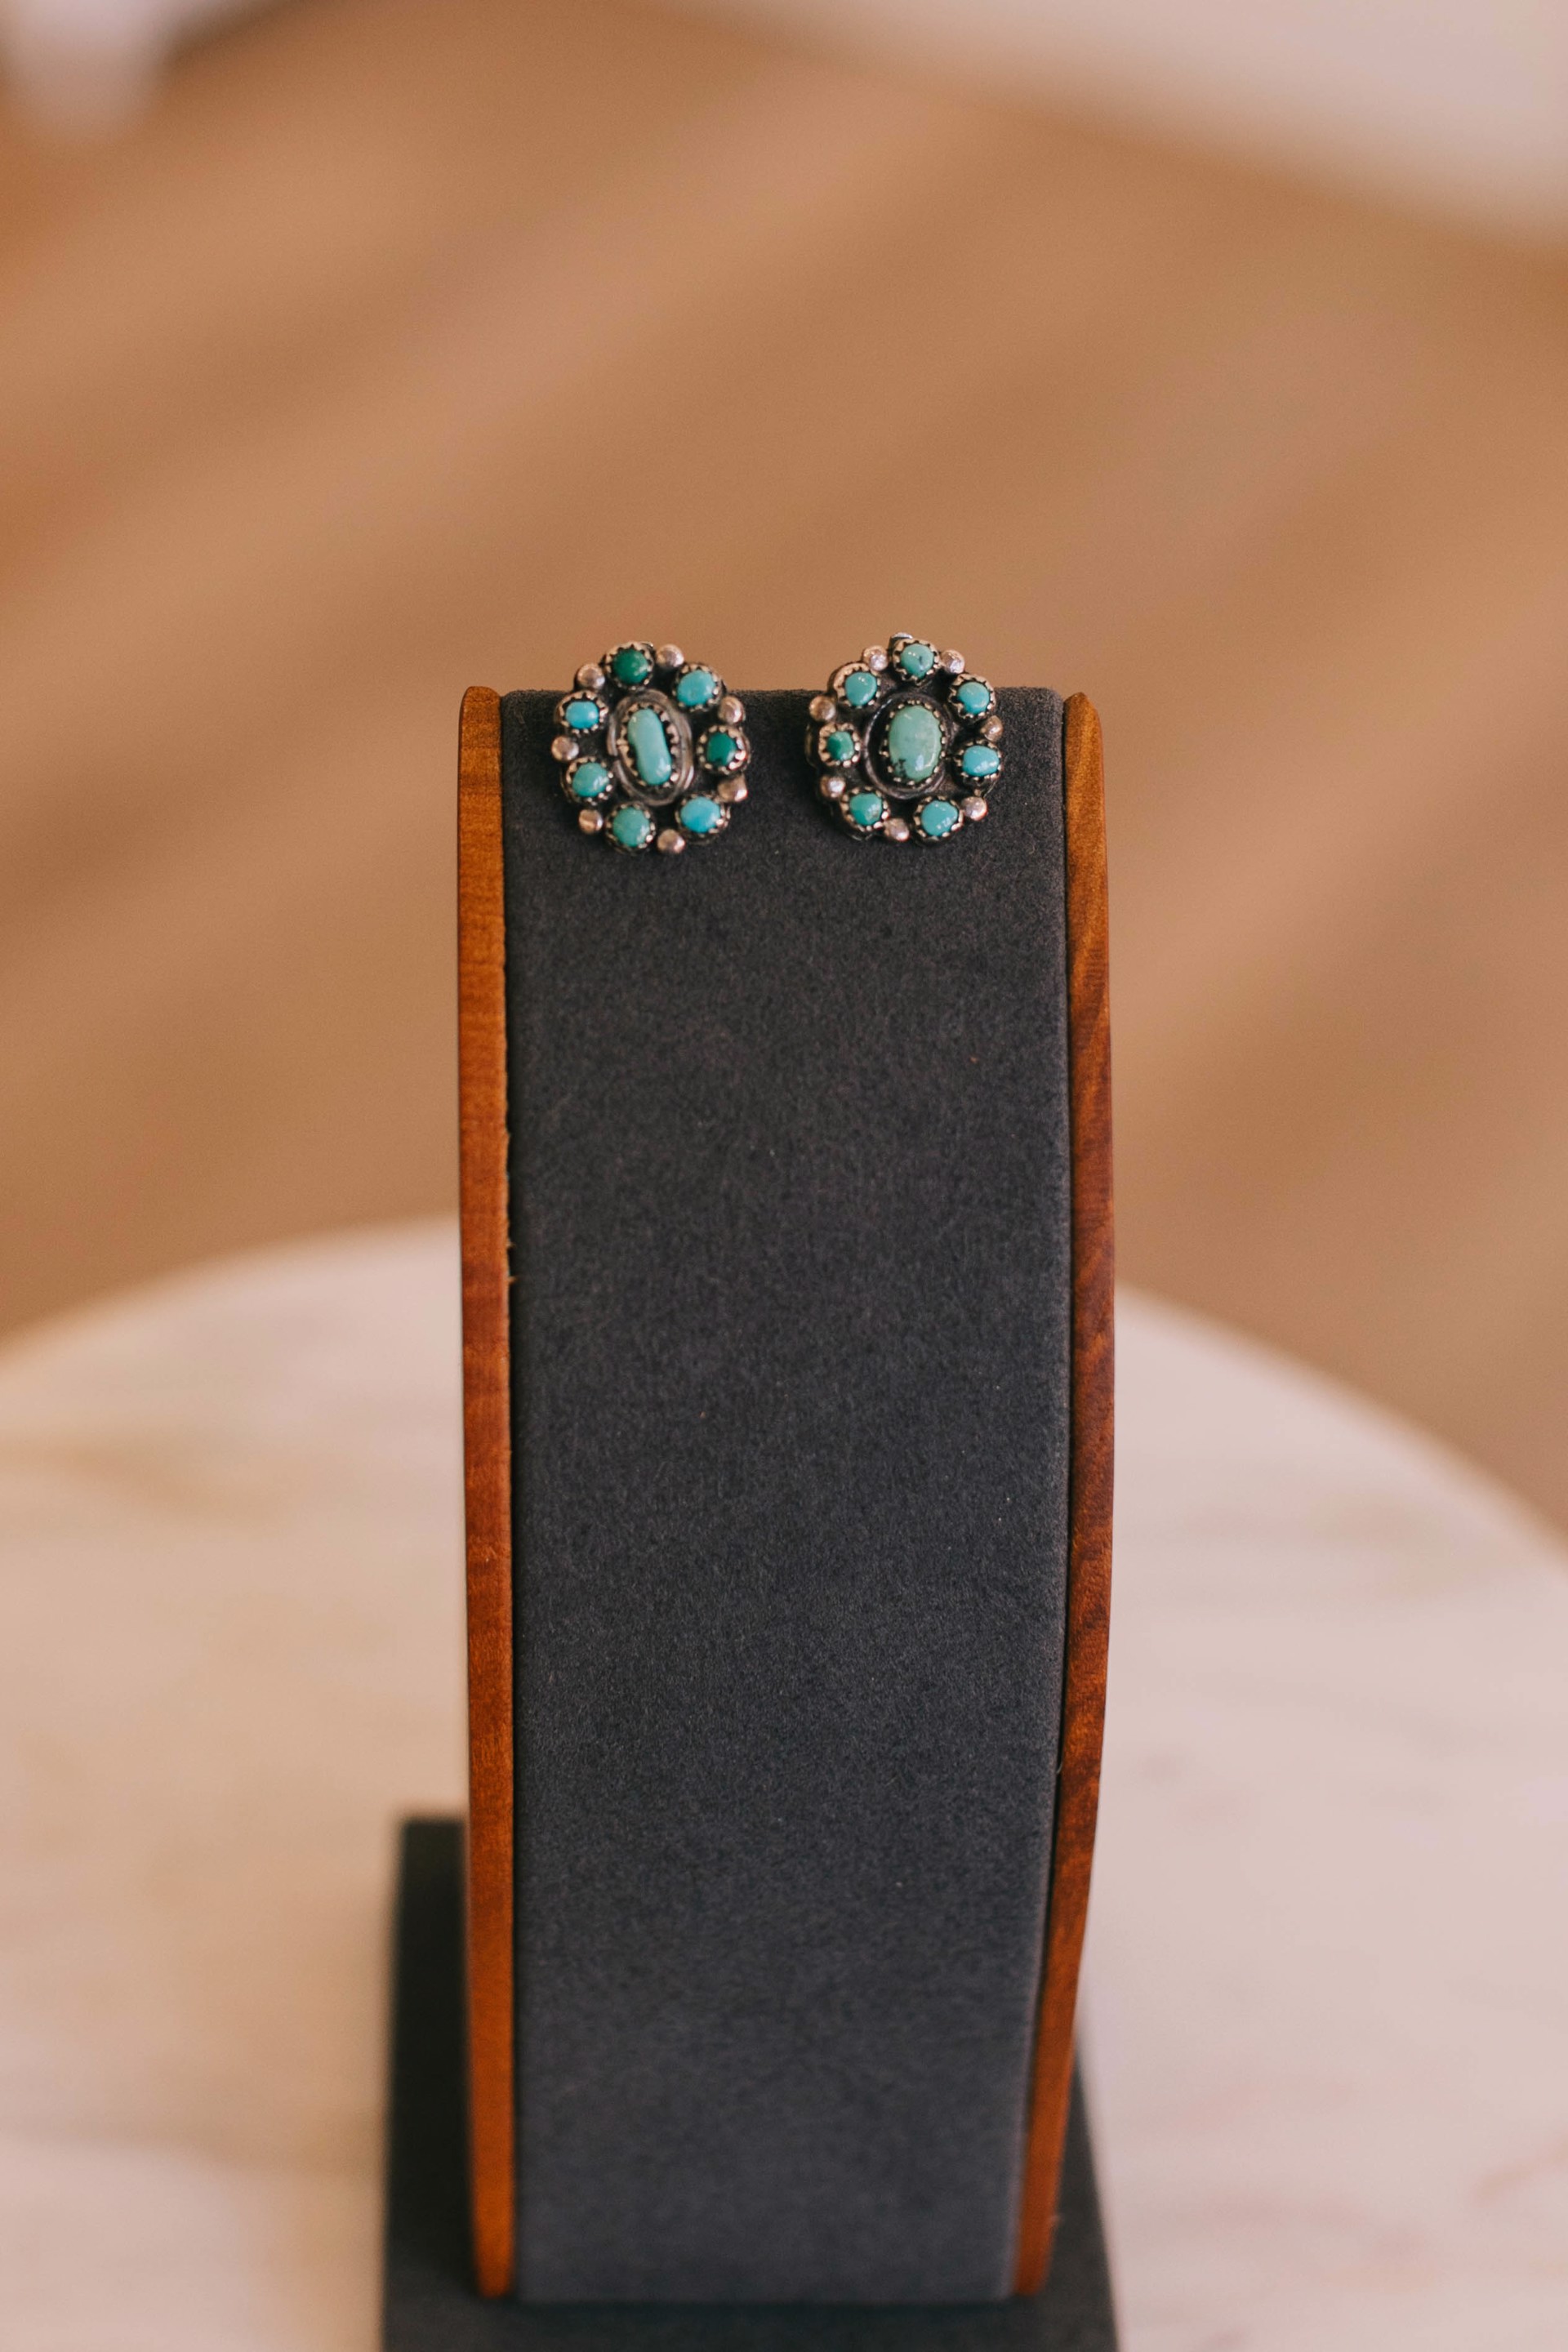 Turquoise Clip Earrings #11 by Richard Hendricks